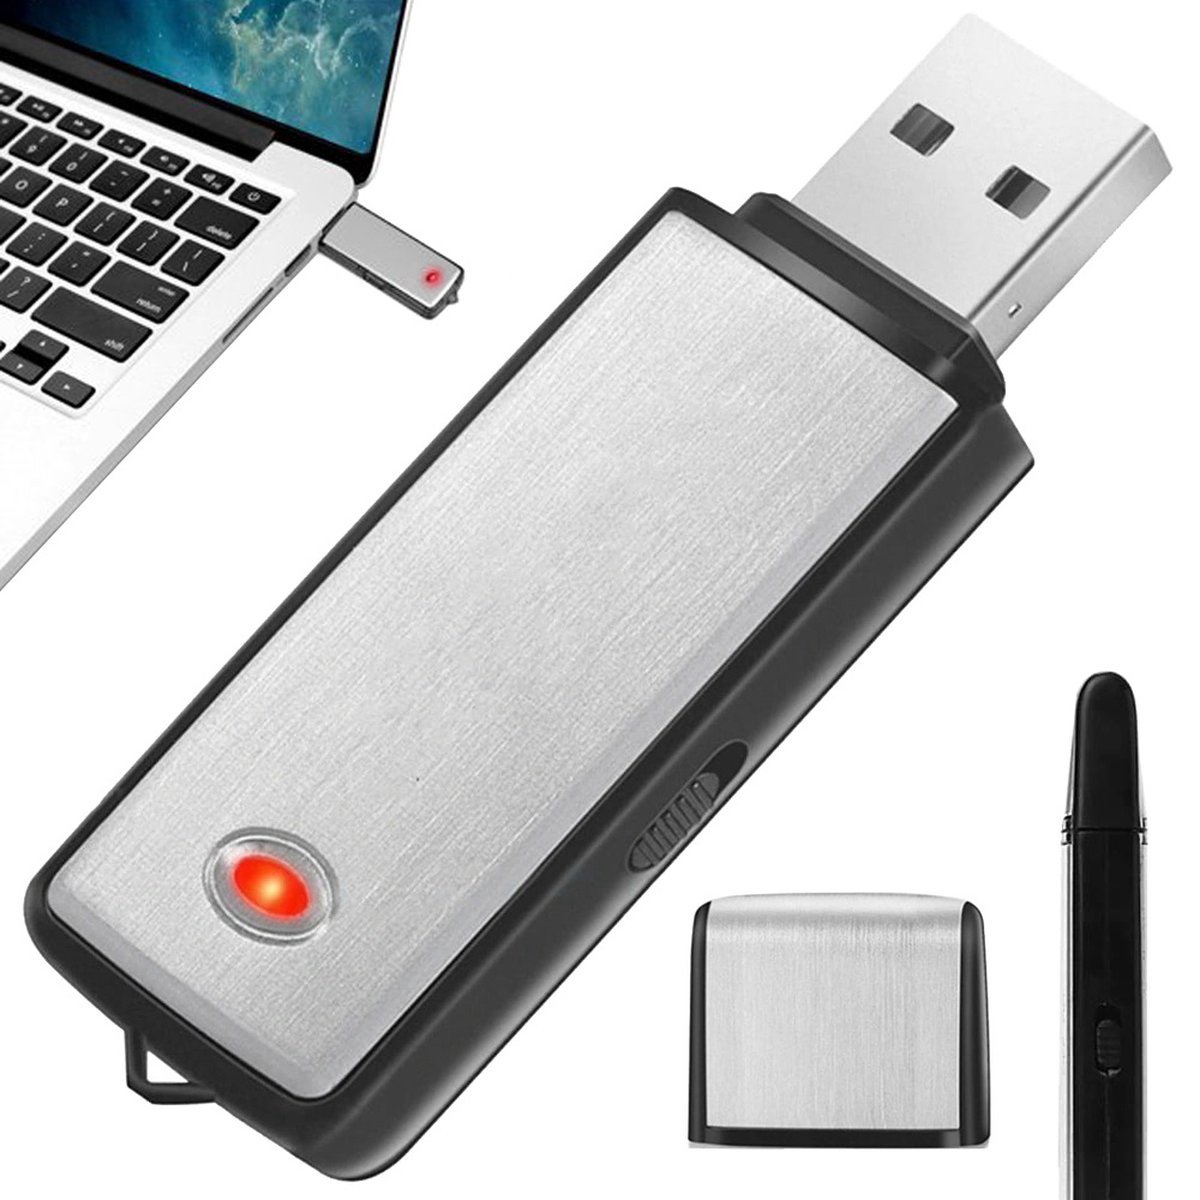 Afluisterapparatuur - USB Stick 8 GB - Audio Recorder - Afluisteren Opnemen